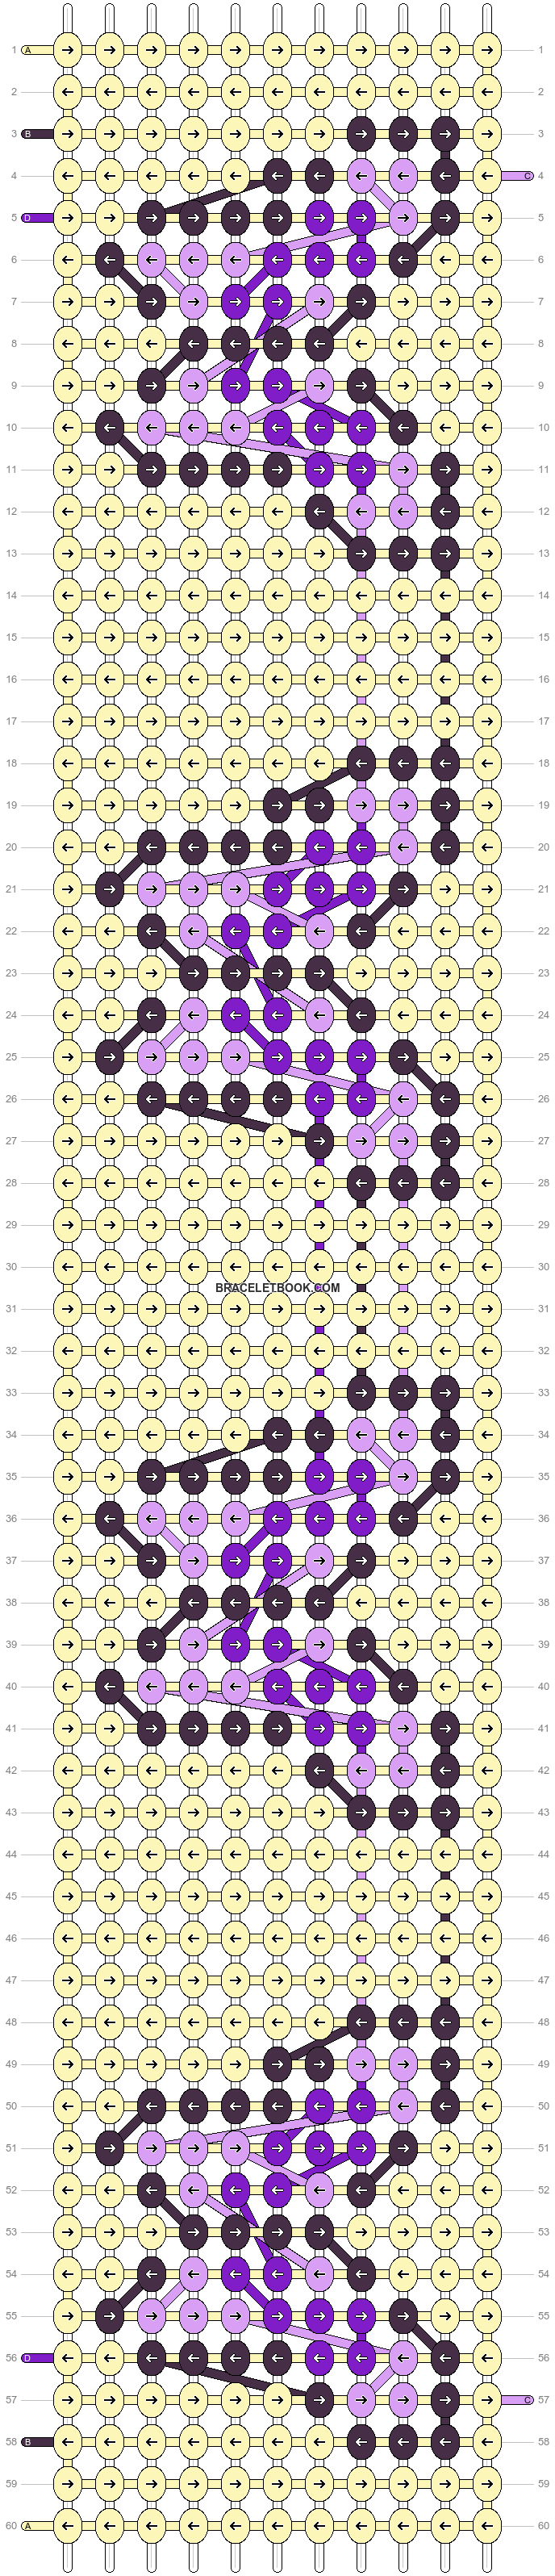 Alpha pattern #34447 variation #32414 pattern